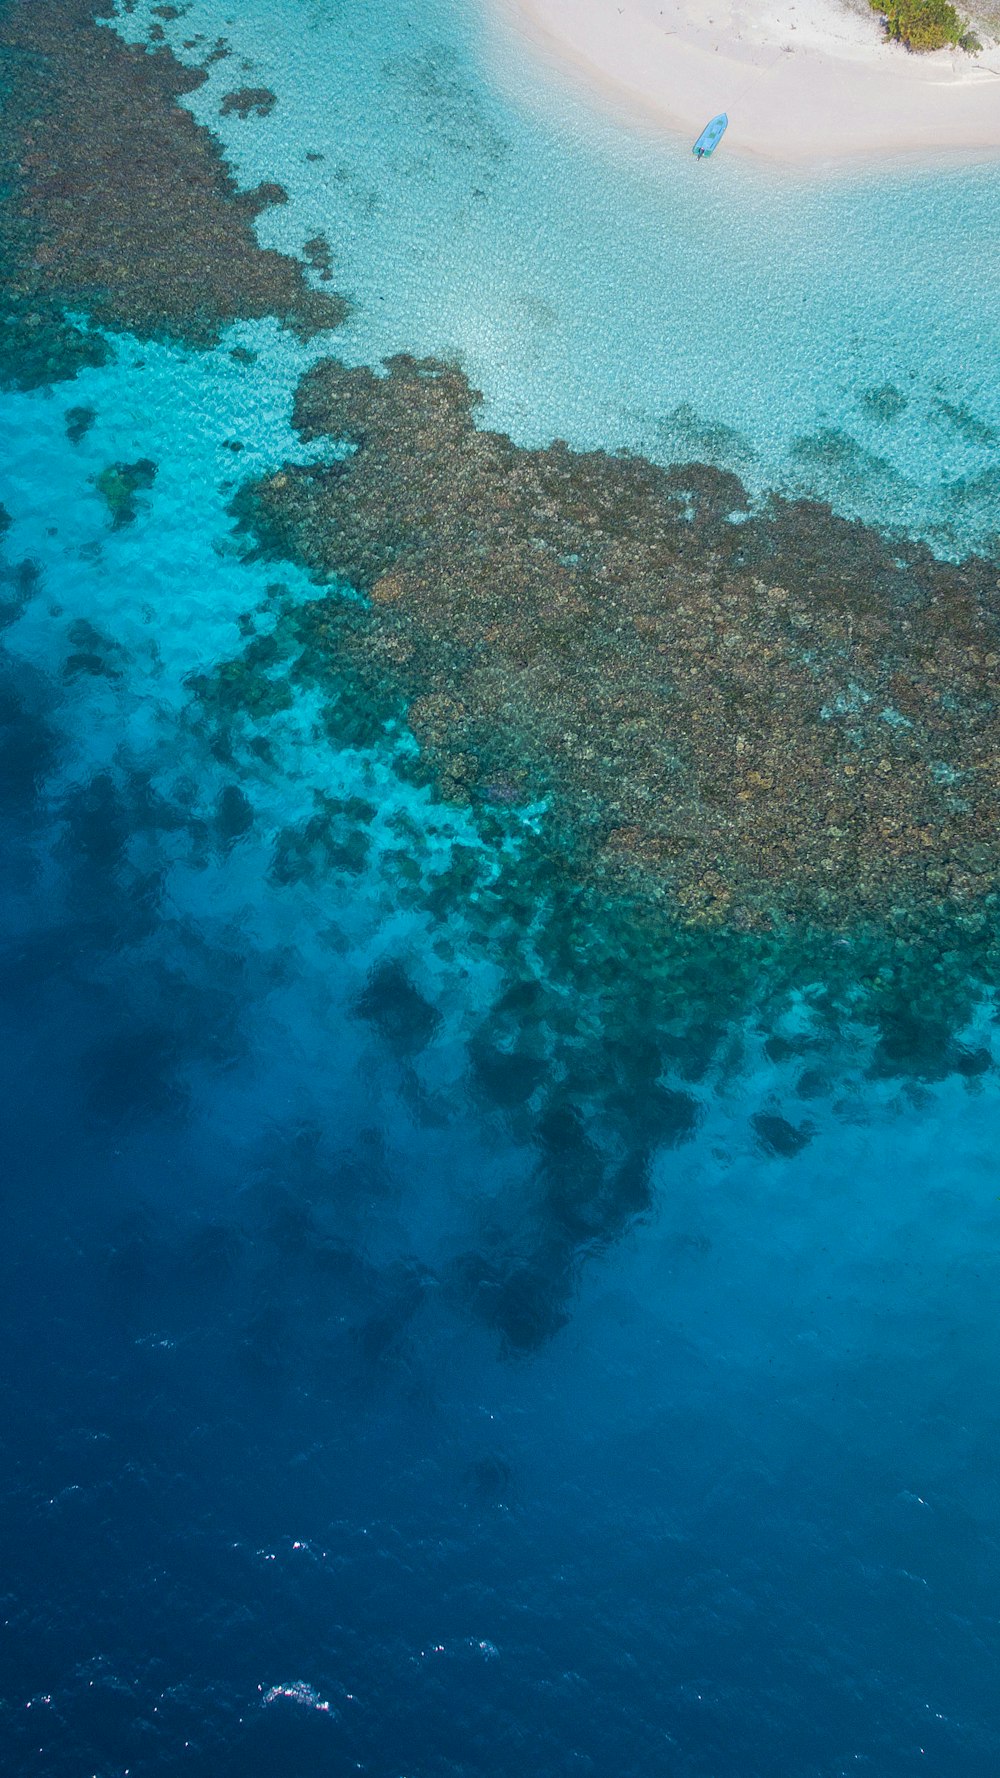 Una vista aérea de un arrecife de coral frente a la costa de una isla tropical